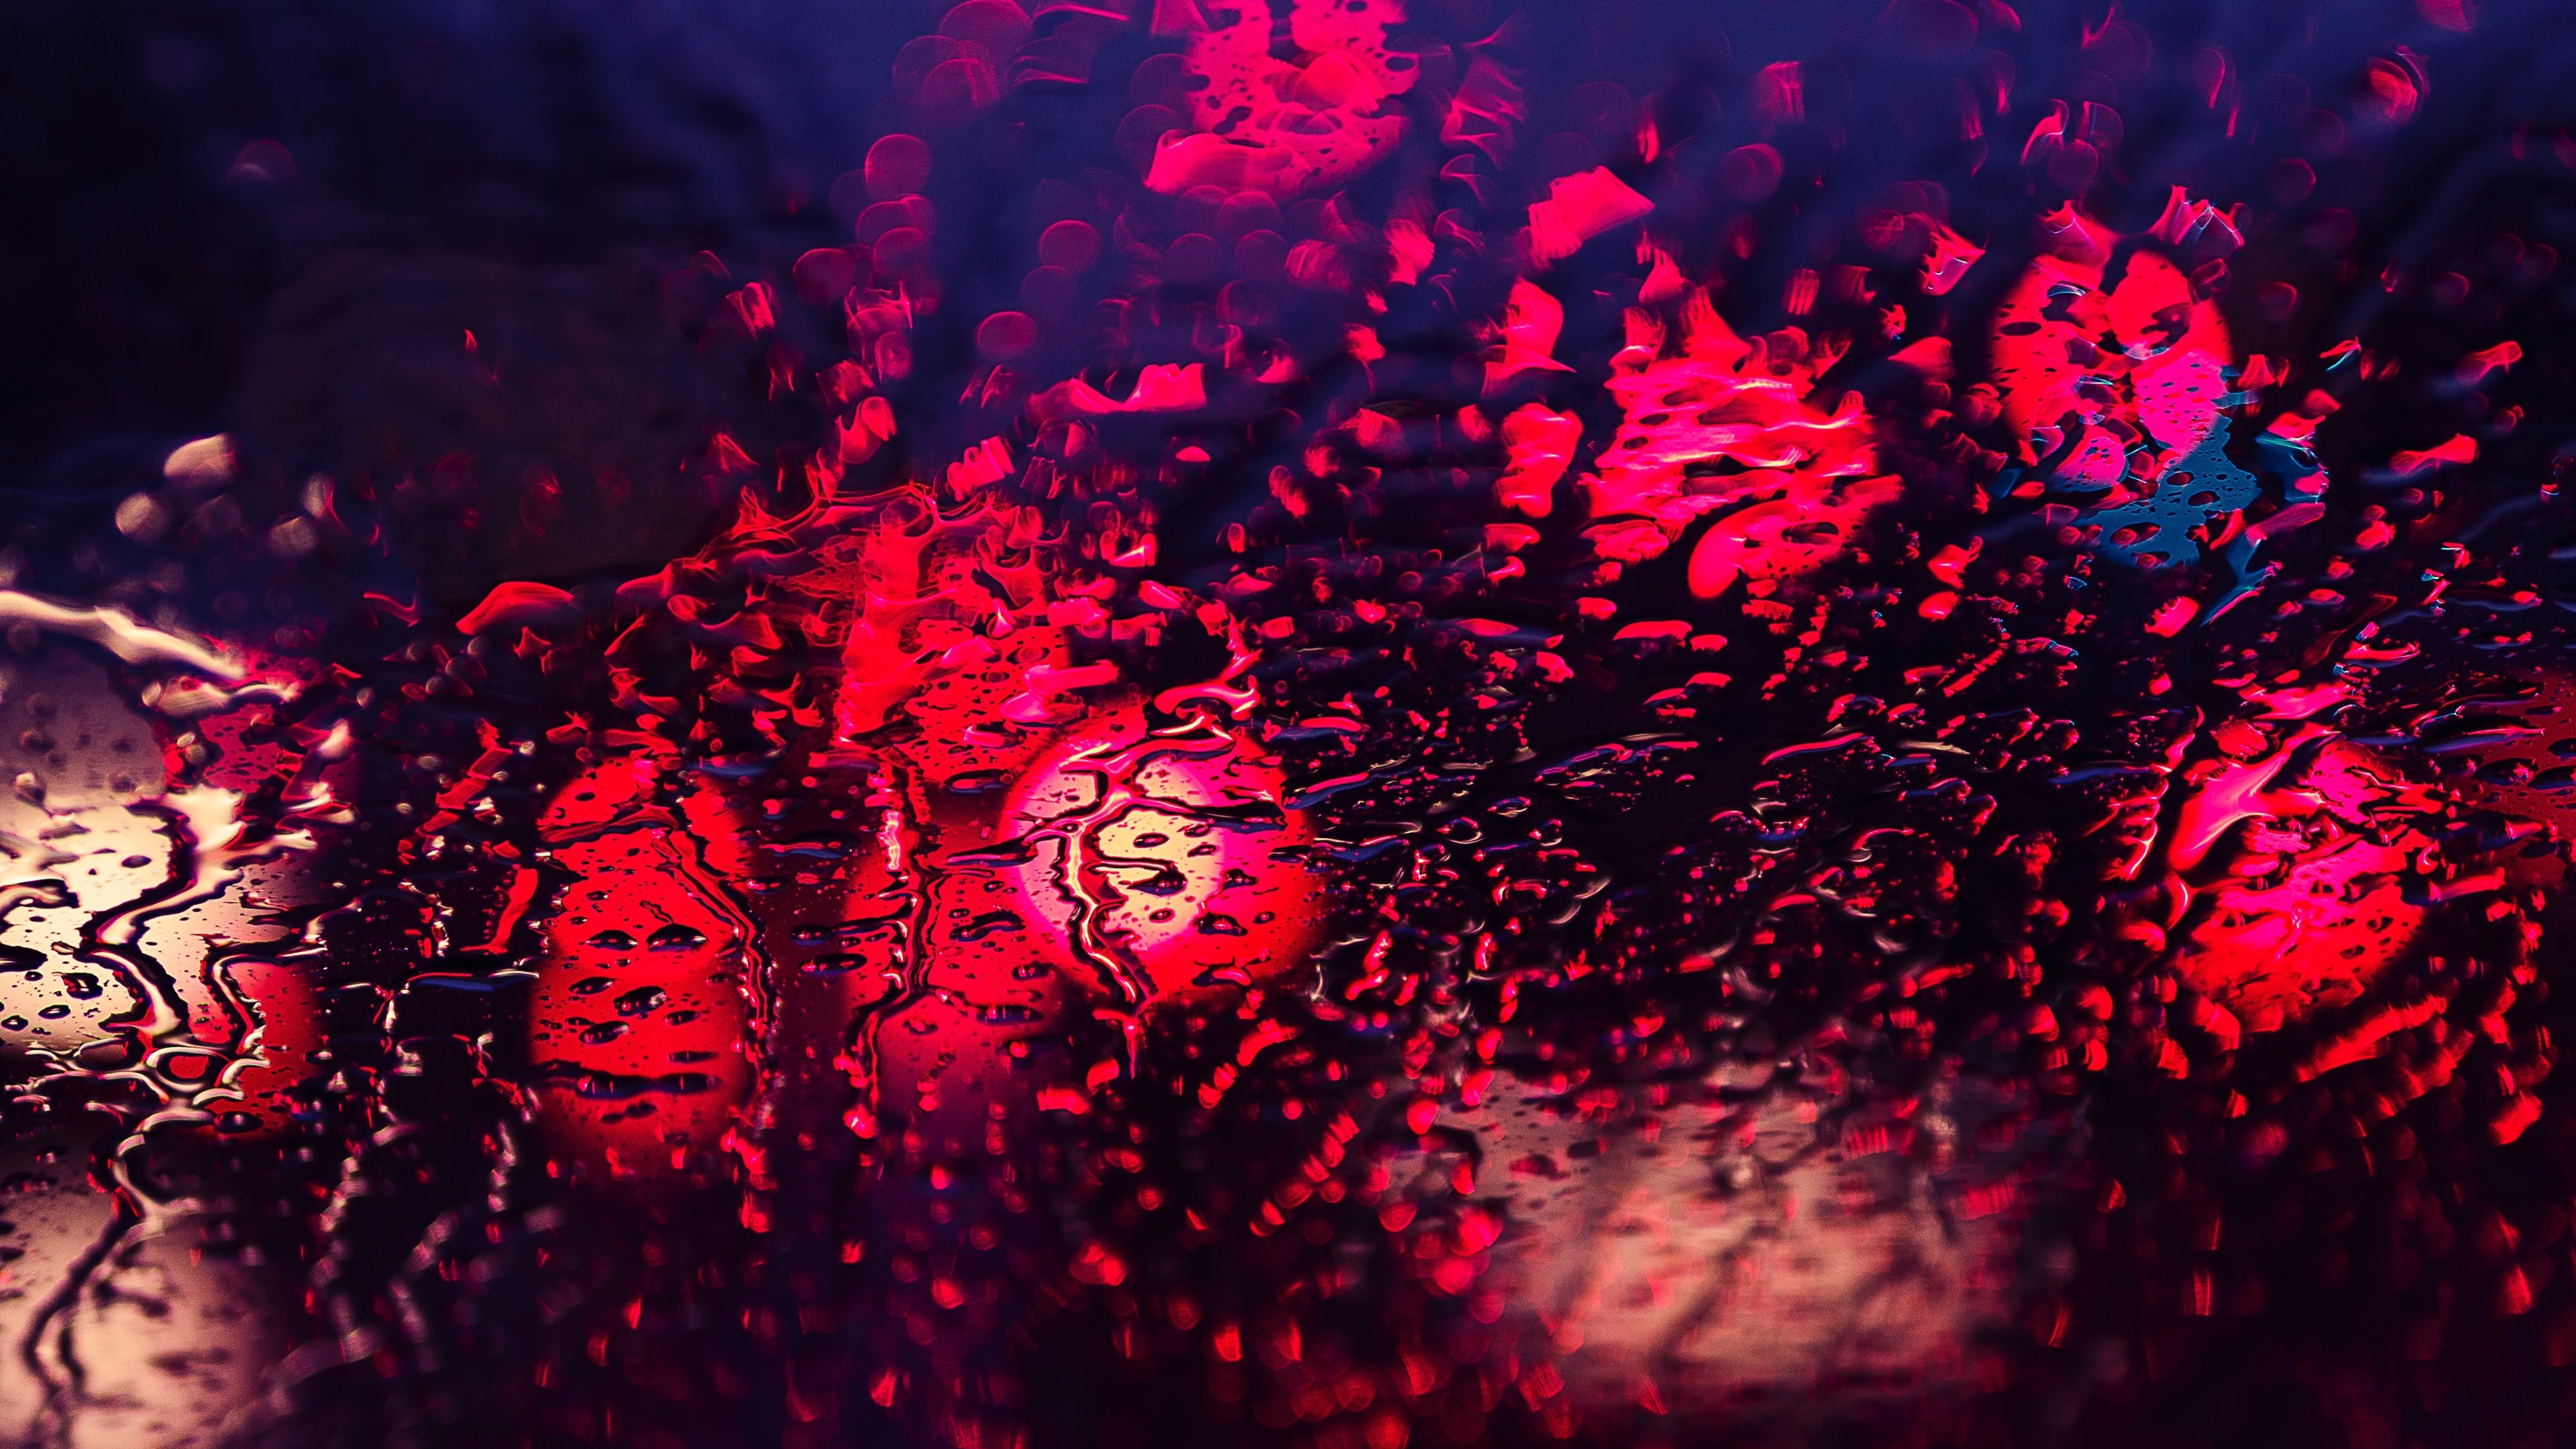 4k Wallpaper Red Lights Cold Rain Drops Window UHD Image